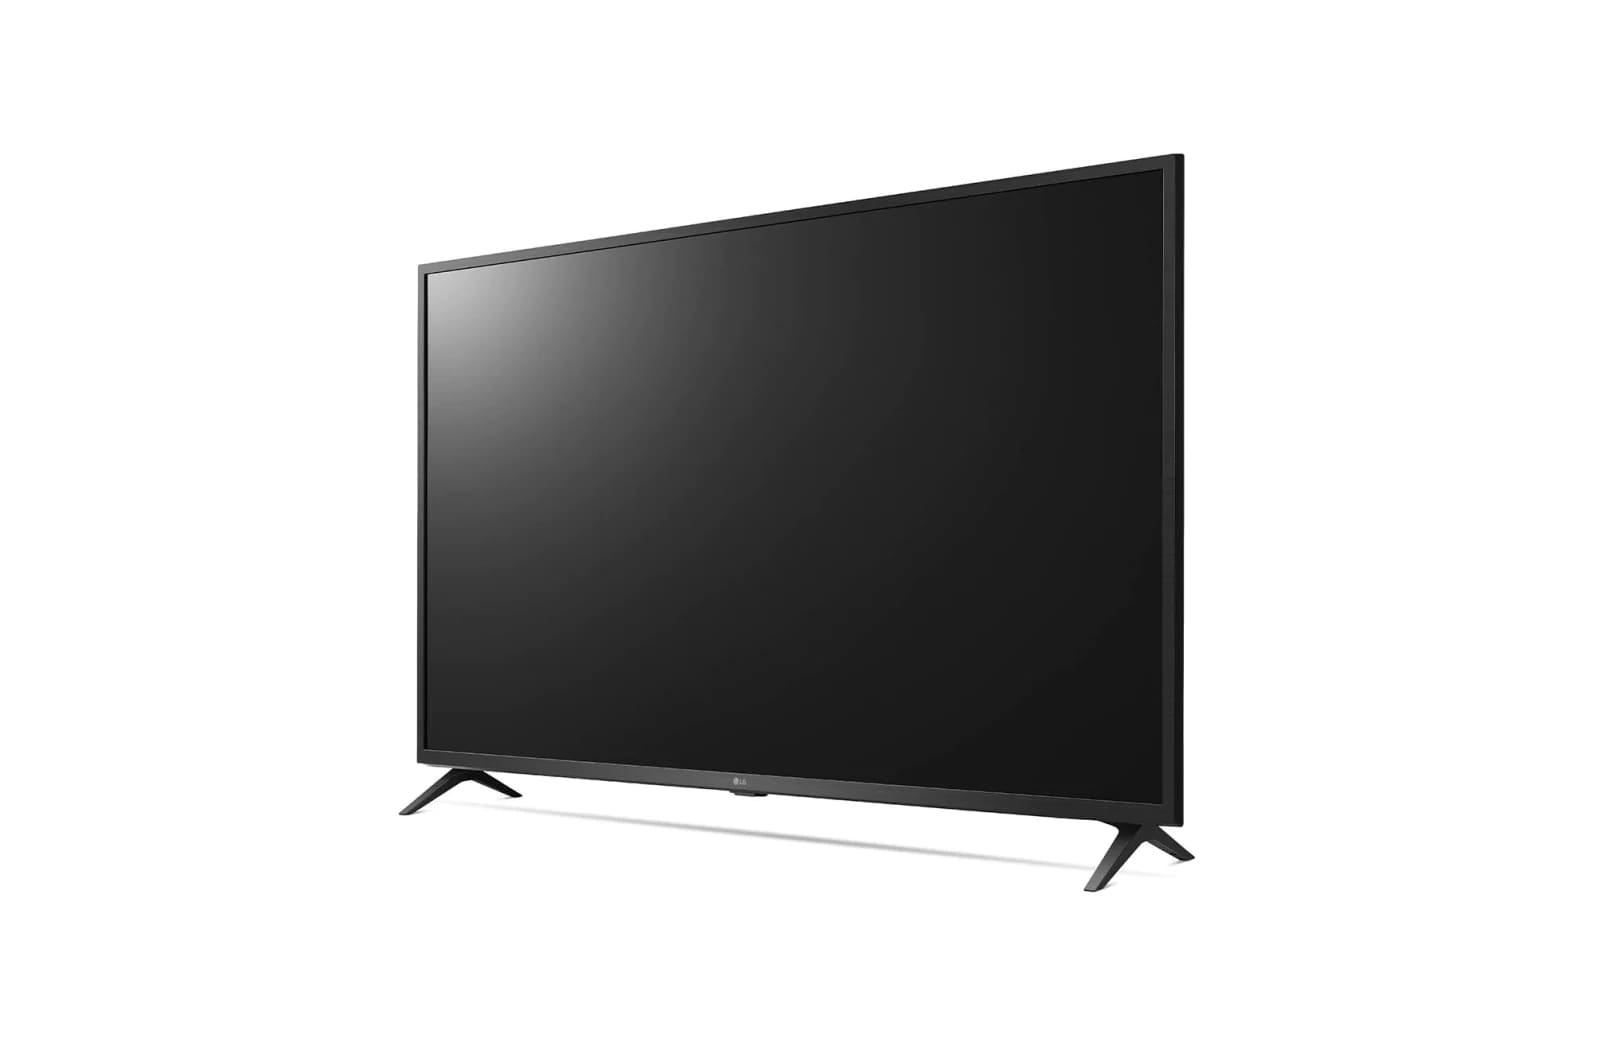 Телевизор LG 32lj500v 32